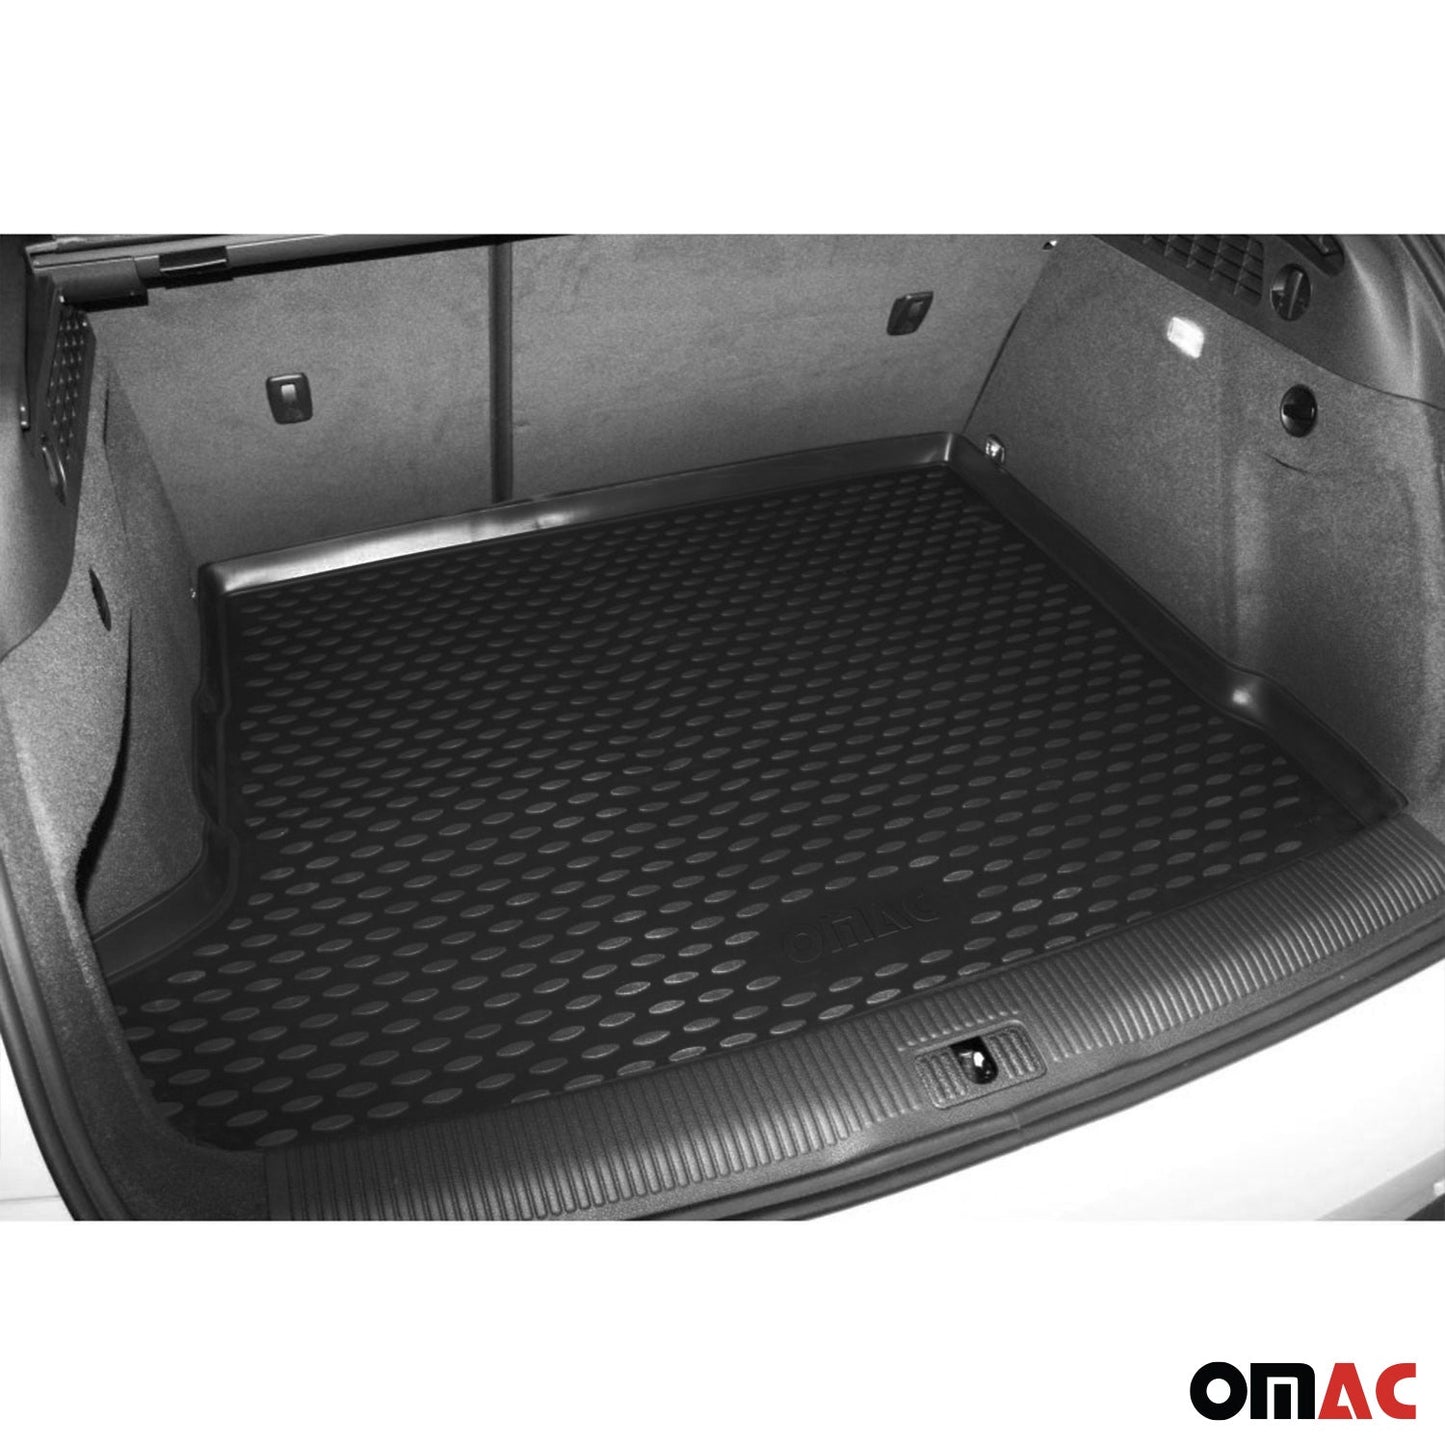 OMAC Cargo Mats Liner for Infiniti G37 2008-2013 Waterproof TPE Black 3905250F